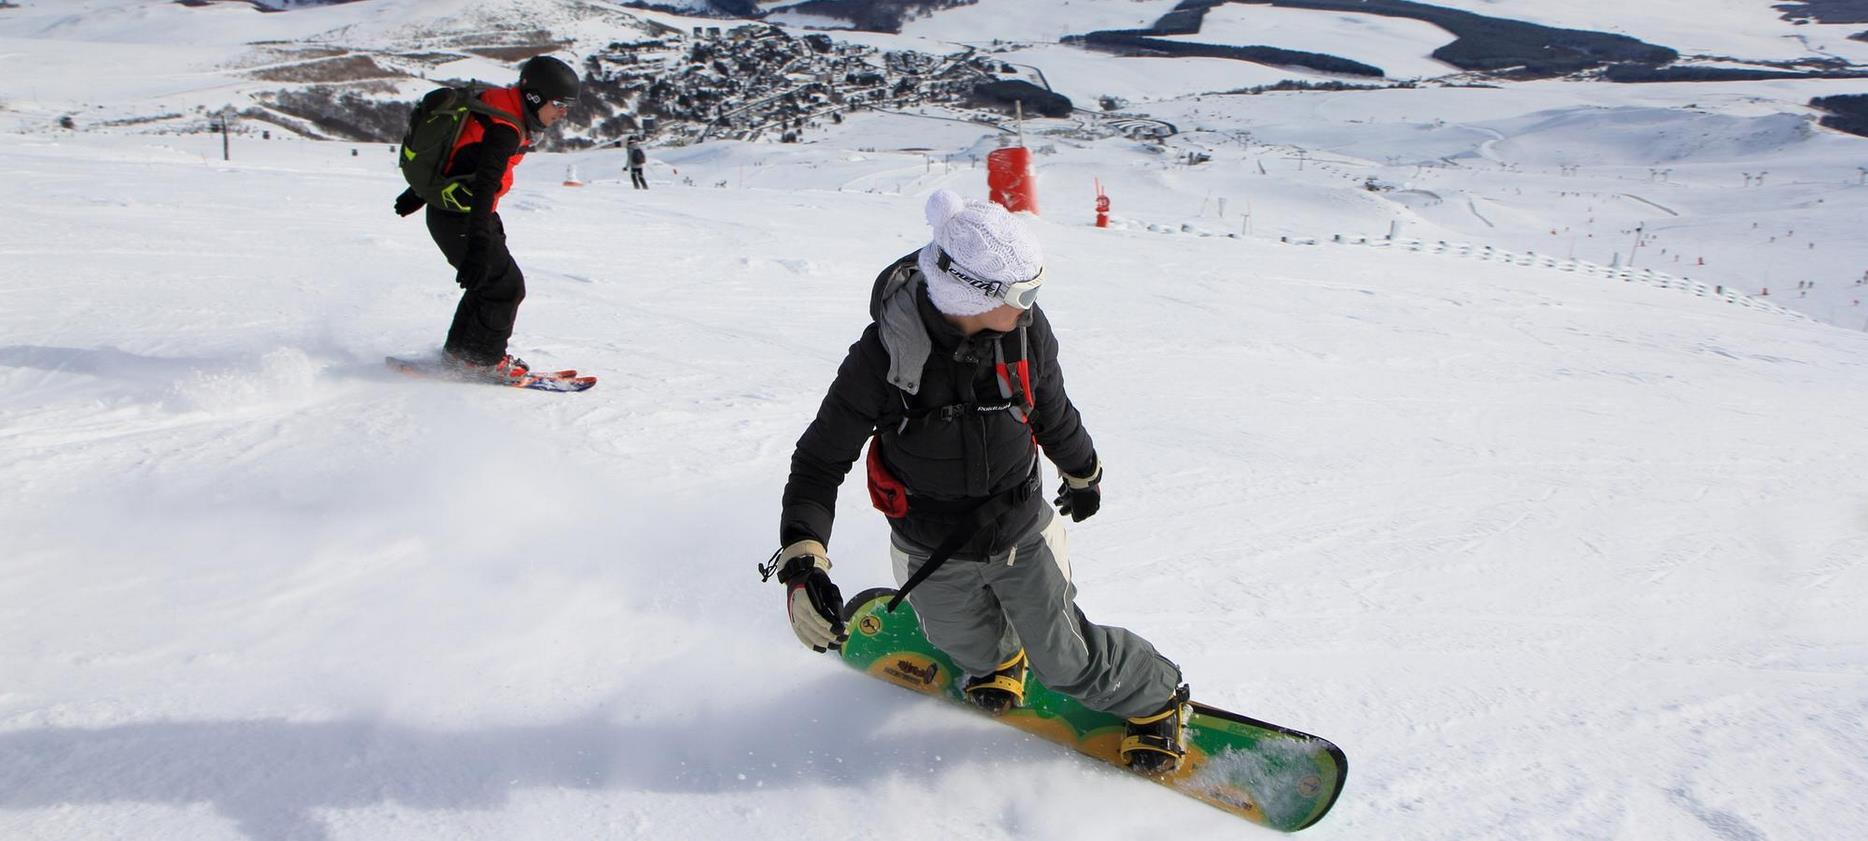 Super Besse - Snowboarding on the ski slopes of the resort of Super Besse